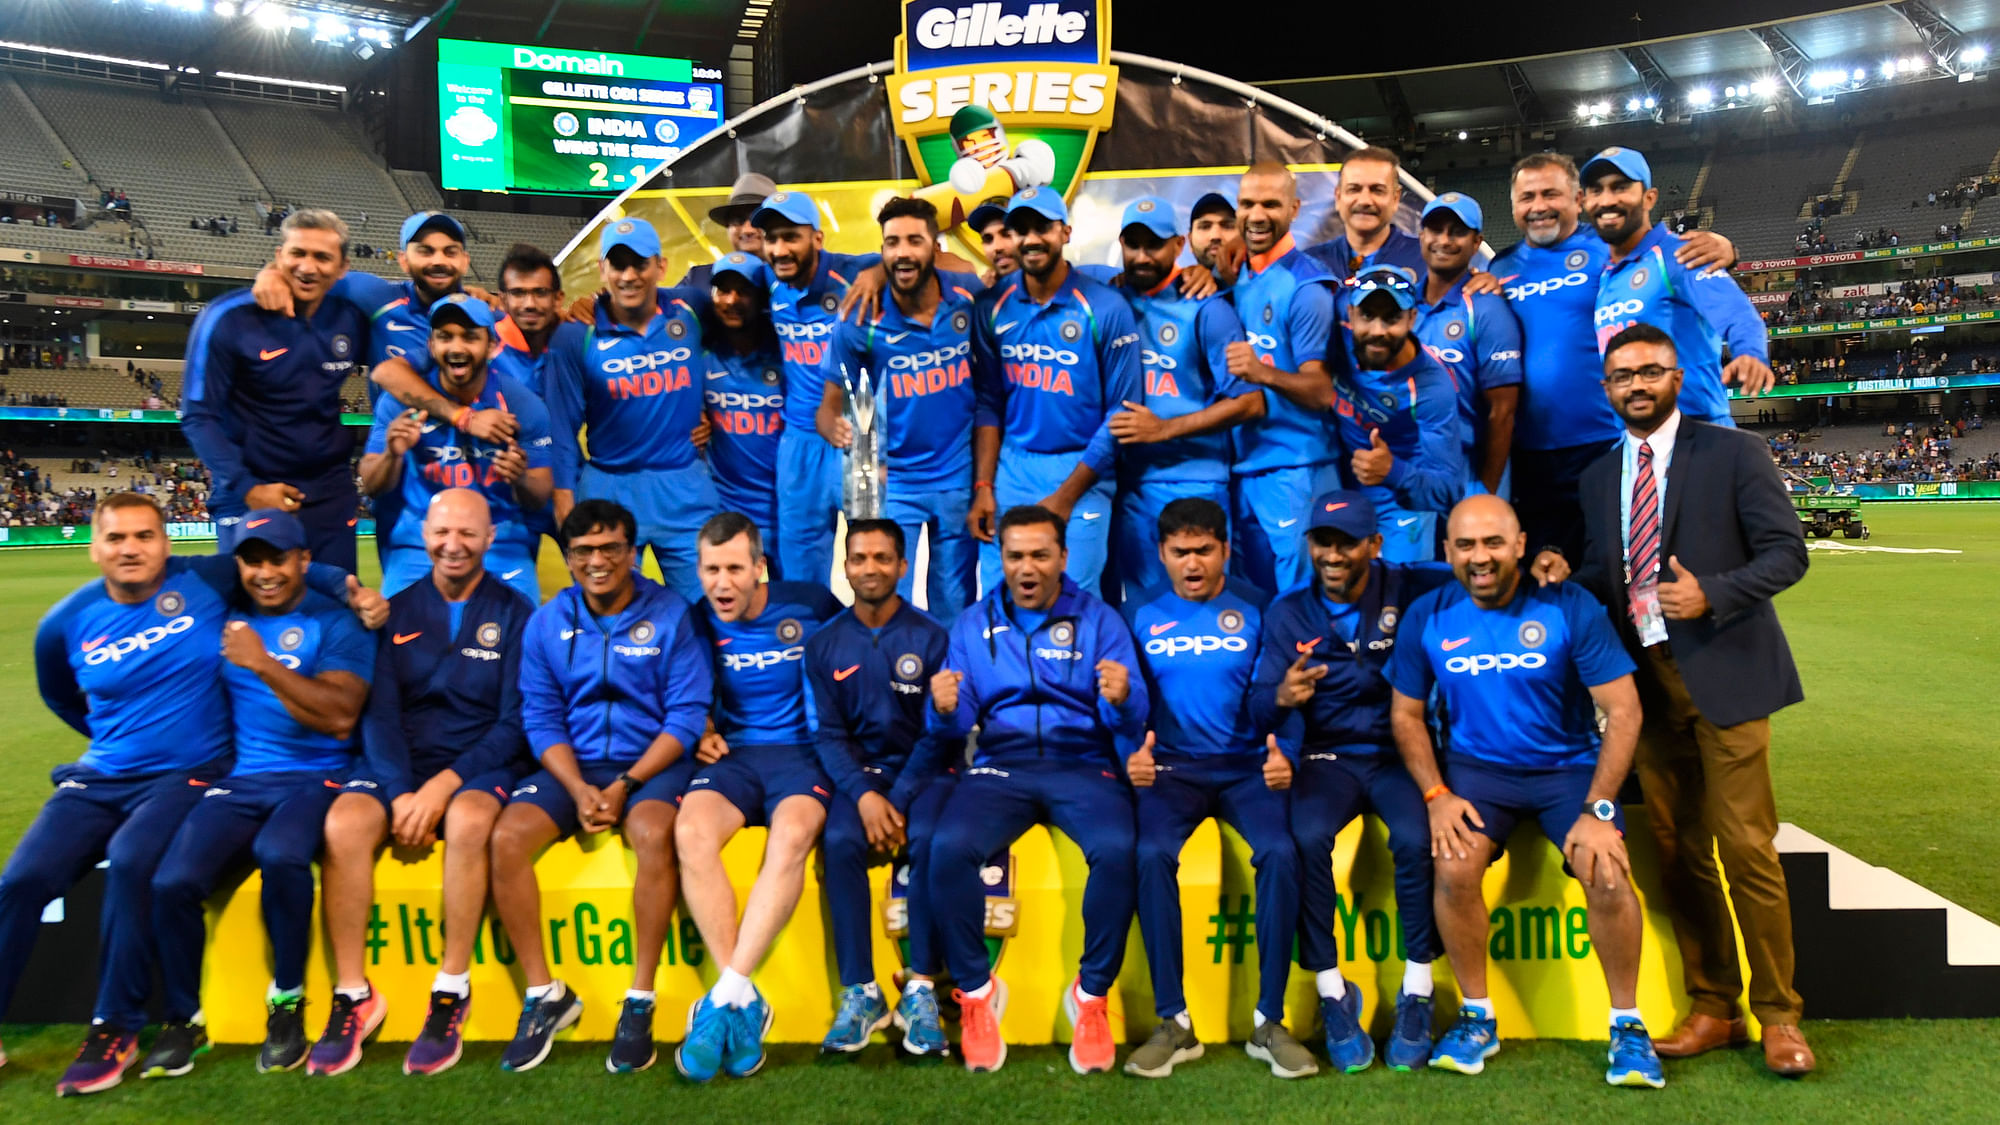 The Indian cricket team won the ODI series against Australia.